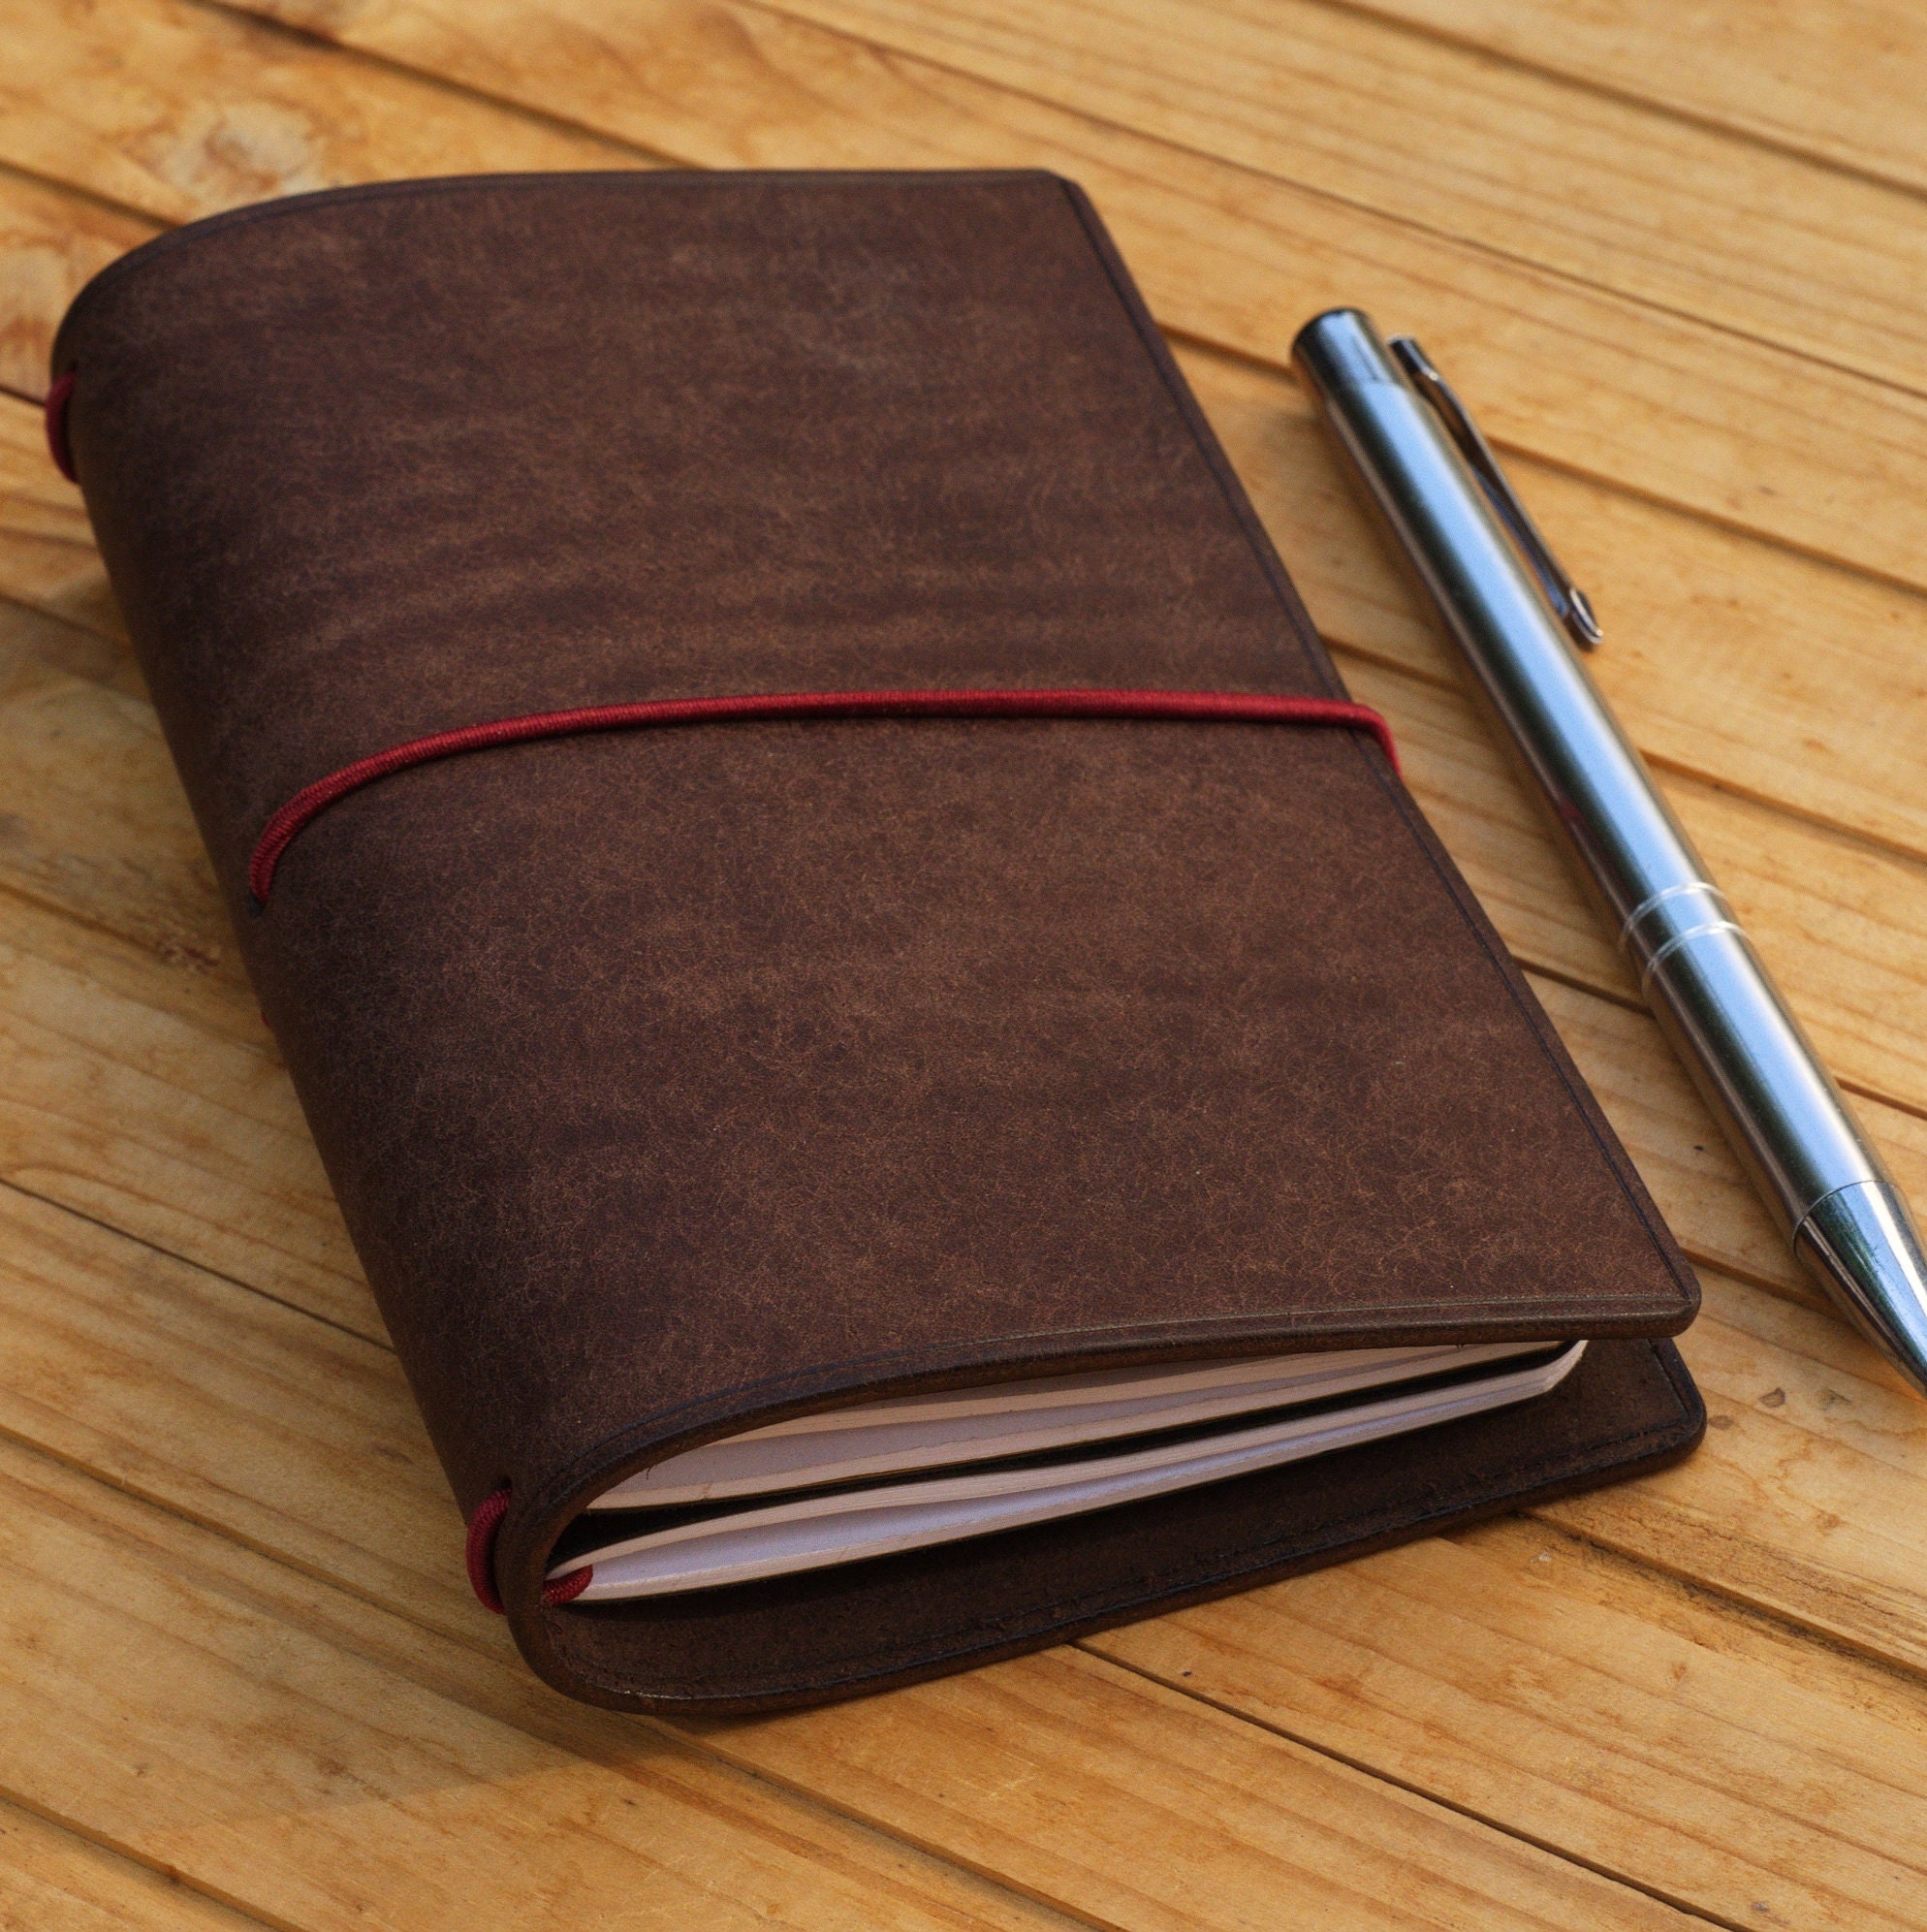 Travelers Notebook Insert Pocket, Dupont Paper Zipper Pouch